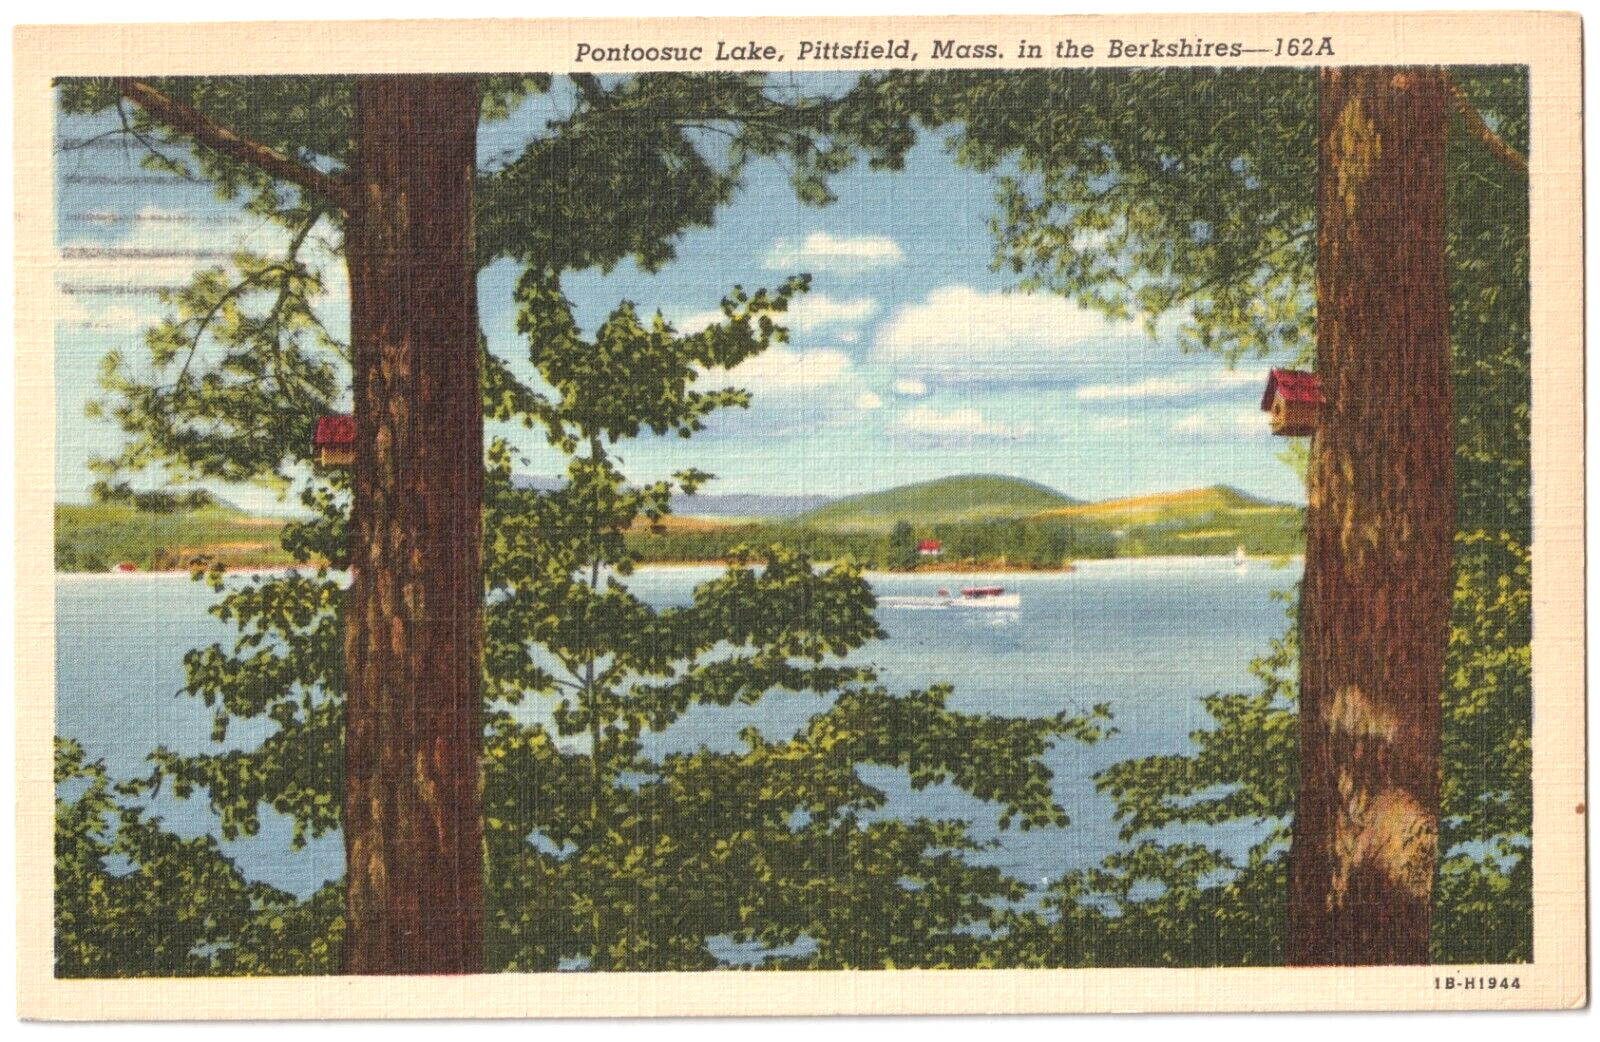 Pontoosuc Lake-Pittsfield MA Massachusetts-Berkshires-vintage 1949 posted